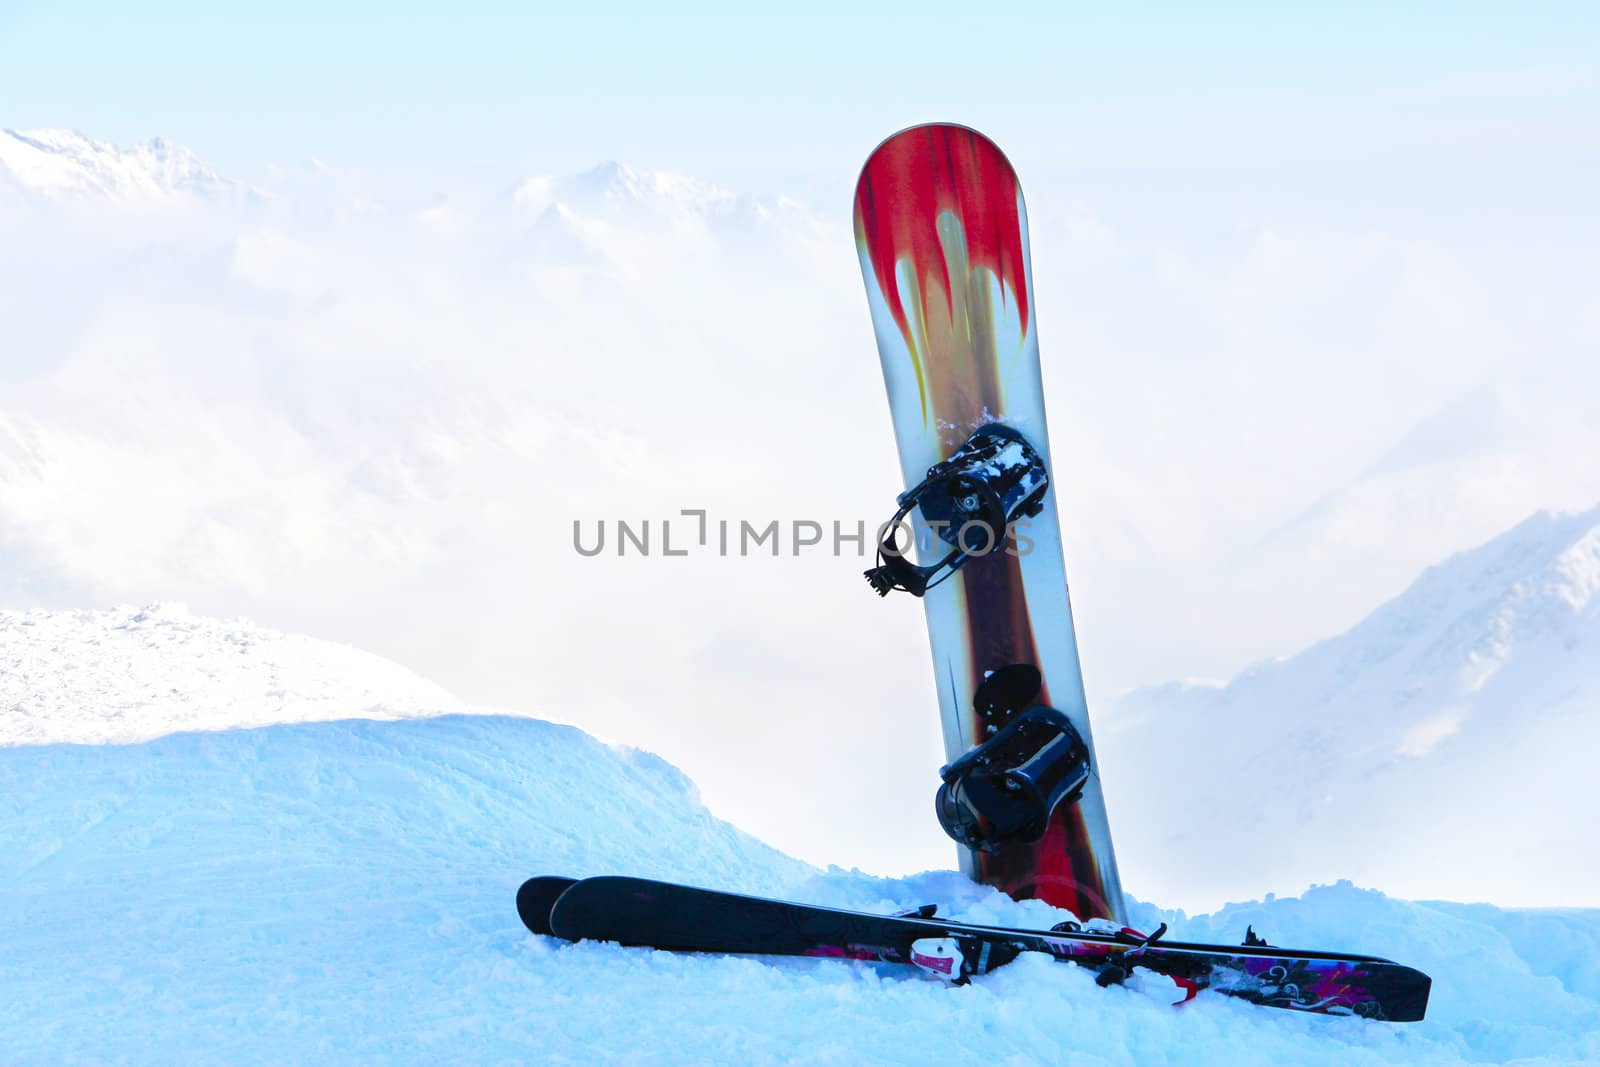 Snowboard and ski in mountains by destillat